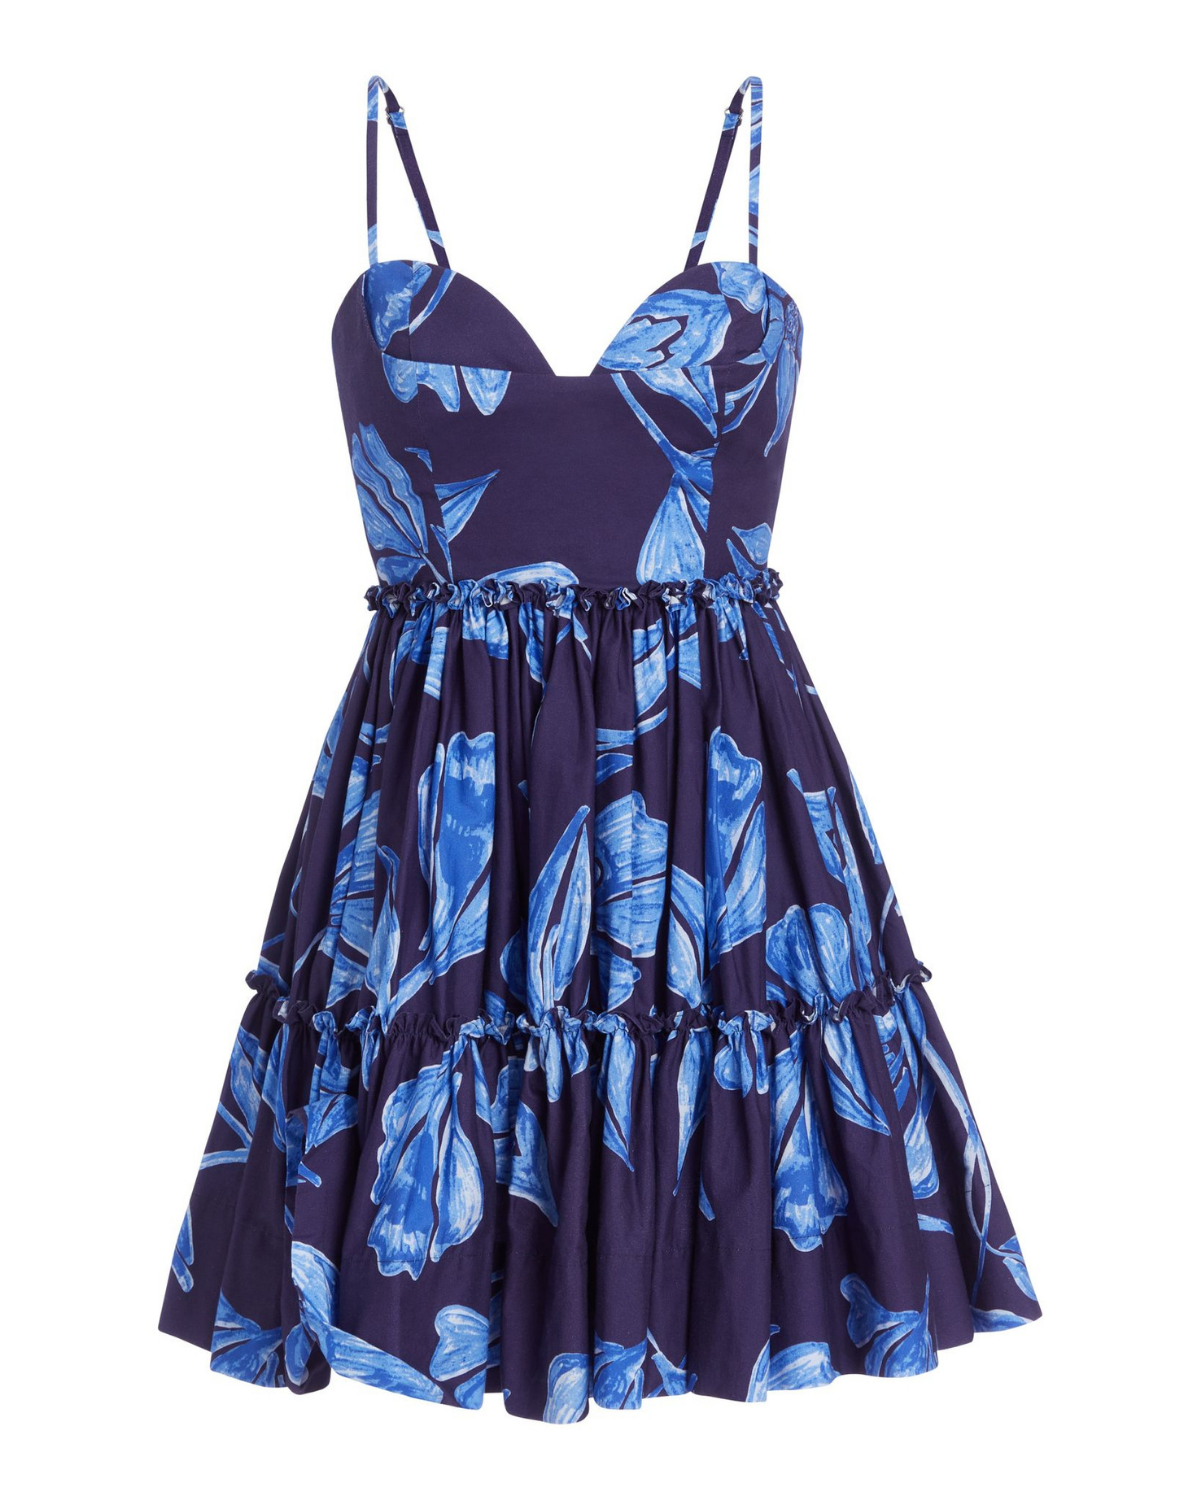 PatBo Nightflower Cotton Mini Dress - Premium Short dress from Marina St Barth - Just $550! Shop now at Marina St Barth